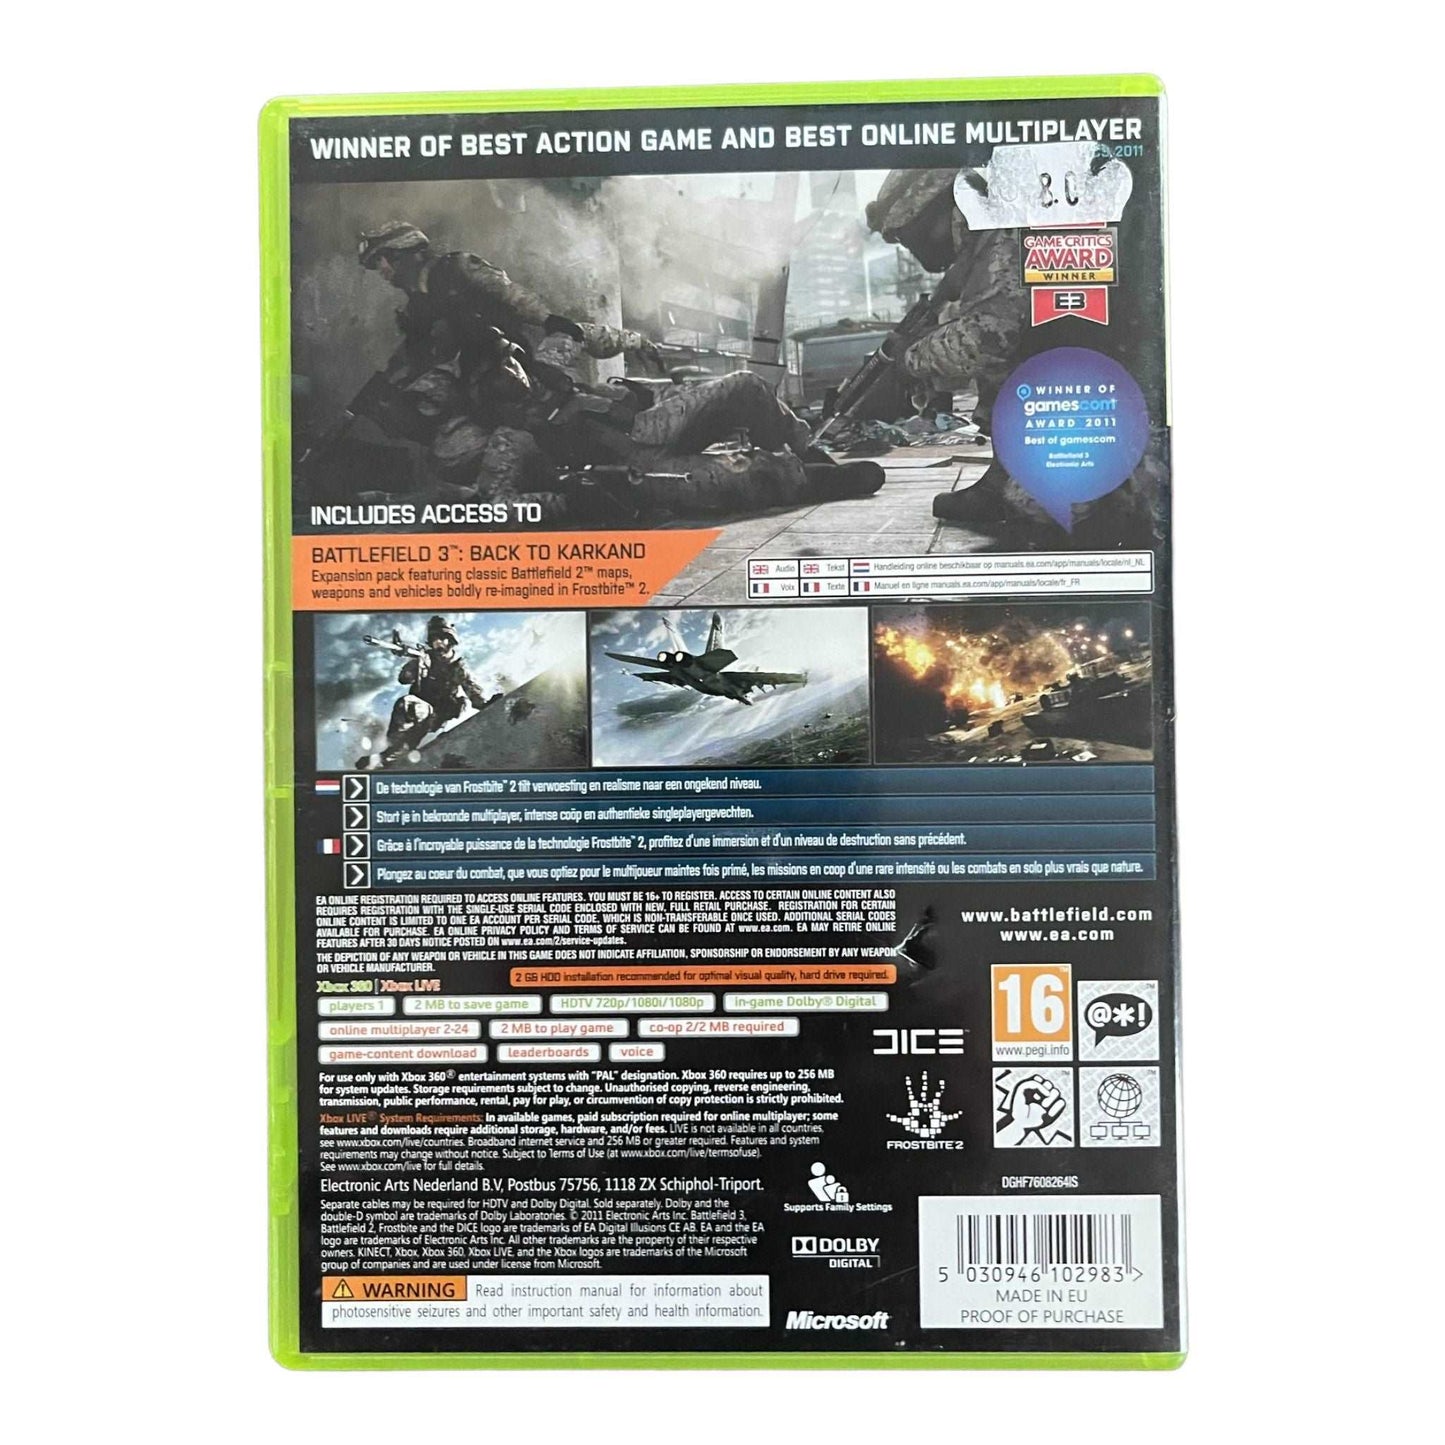 Battlefield 3 Limited Edition - XBox 360